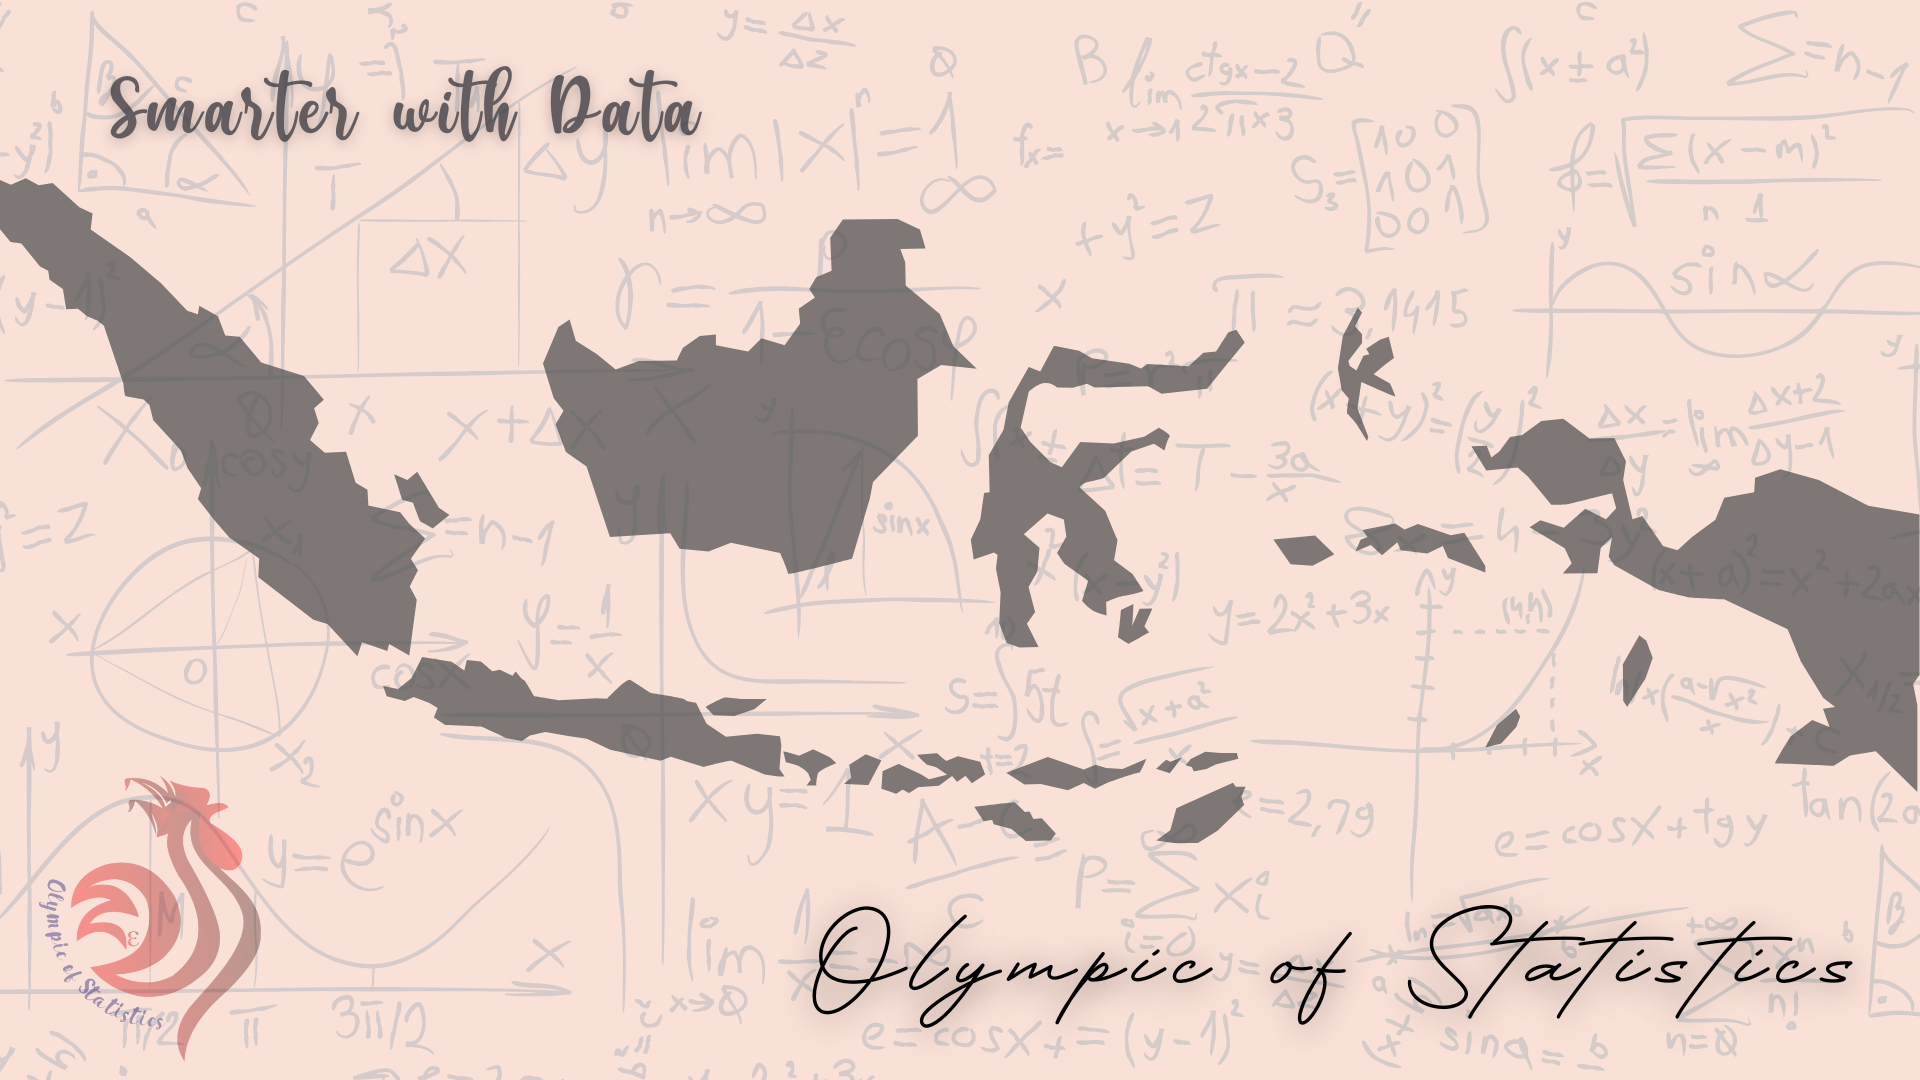 Olympic of Statistics (OLS) 